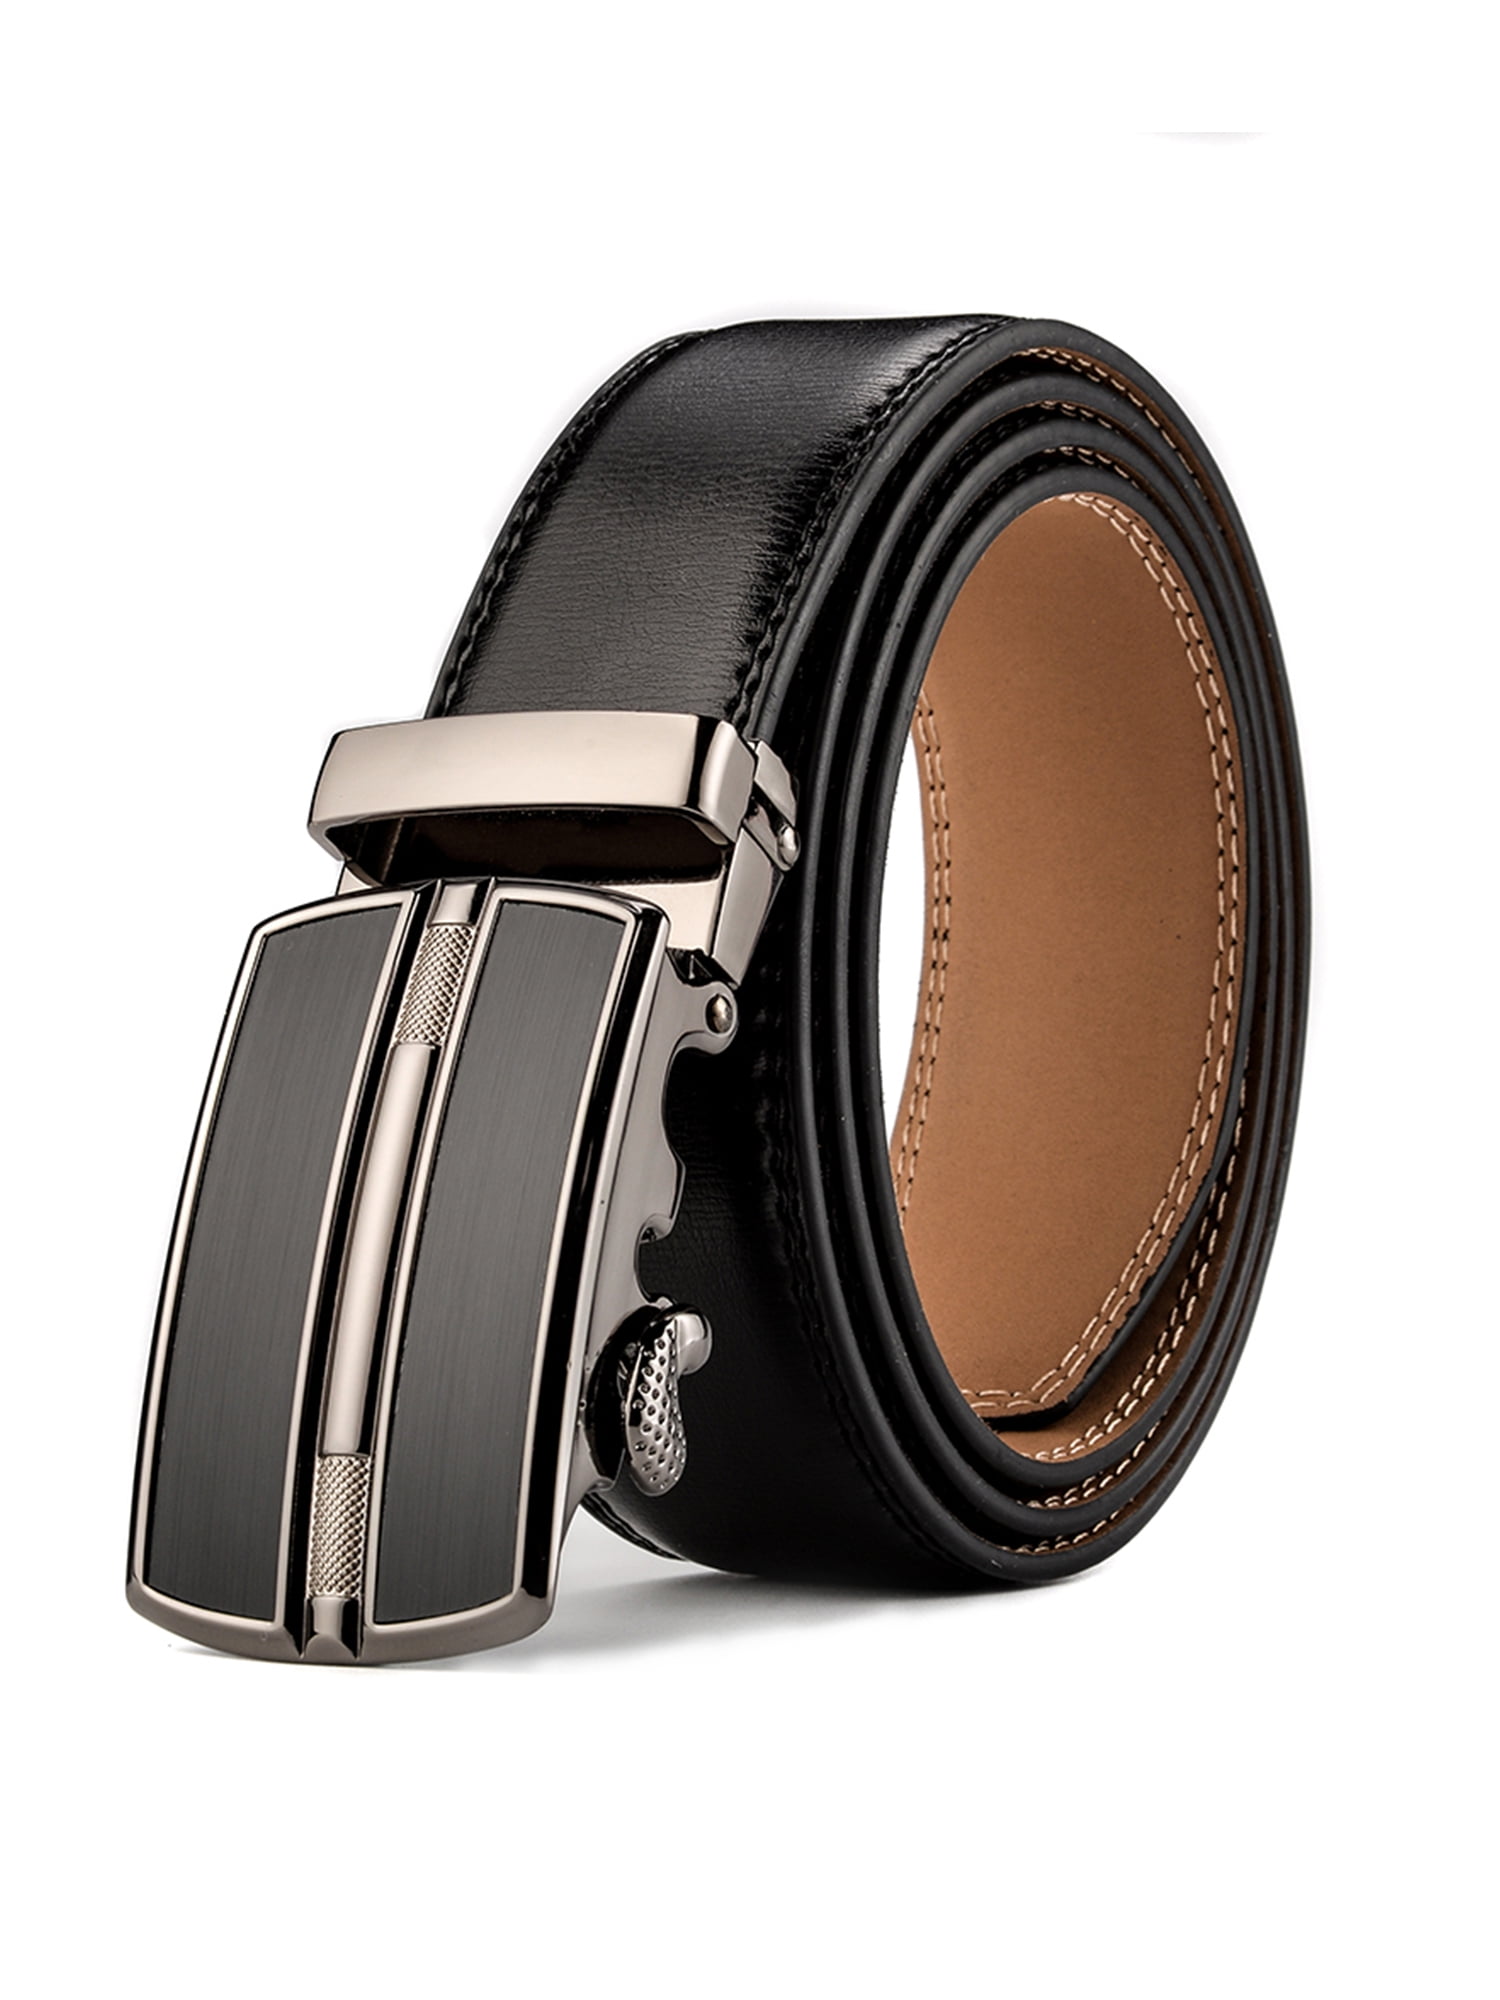 Xhtang Mens Adjustable Leather Ratchet Belt Automatic Buckle 